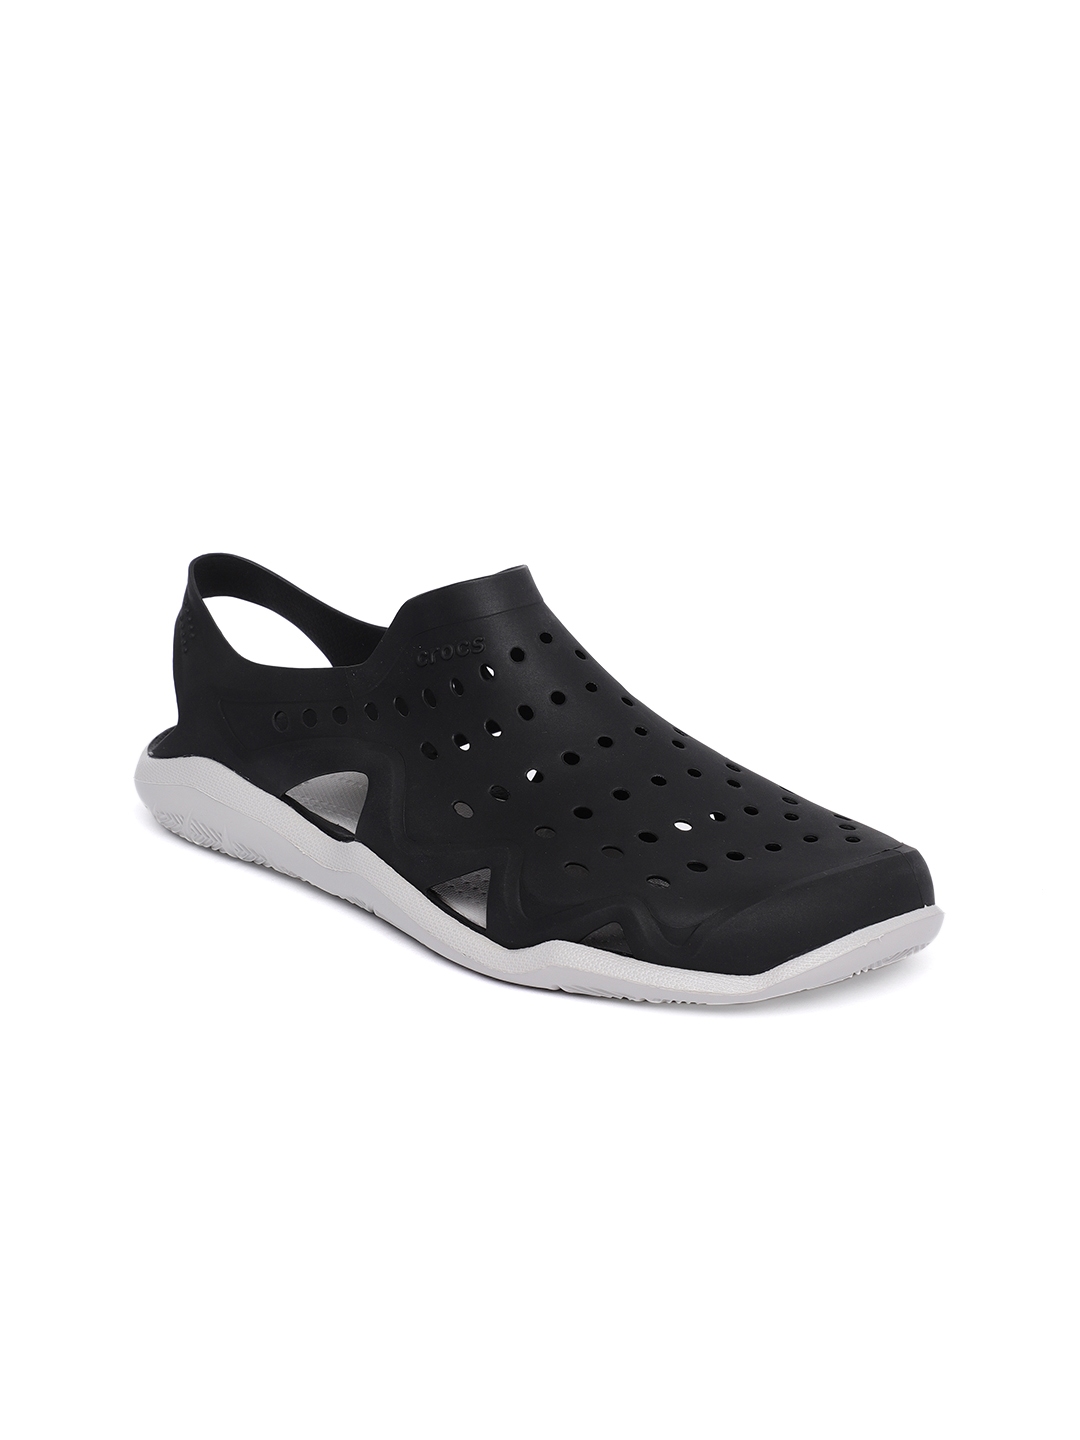 Buy Crocs Men Black Clogs - Casual Shoes for Men 6516383 | Myntra